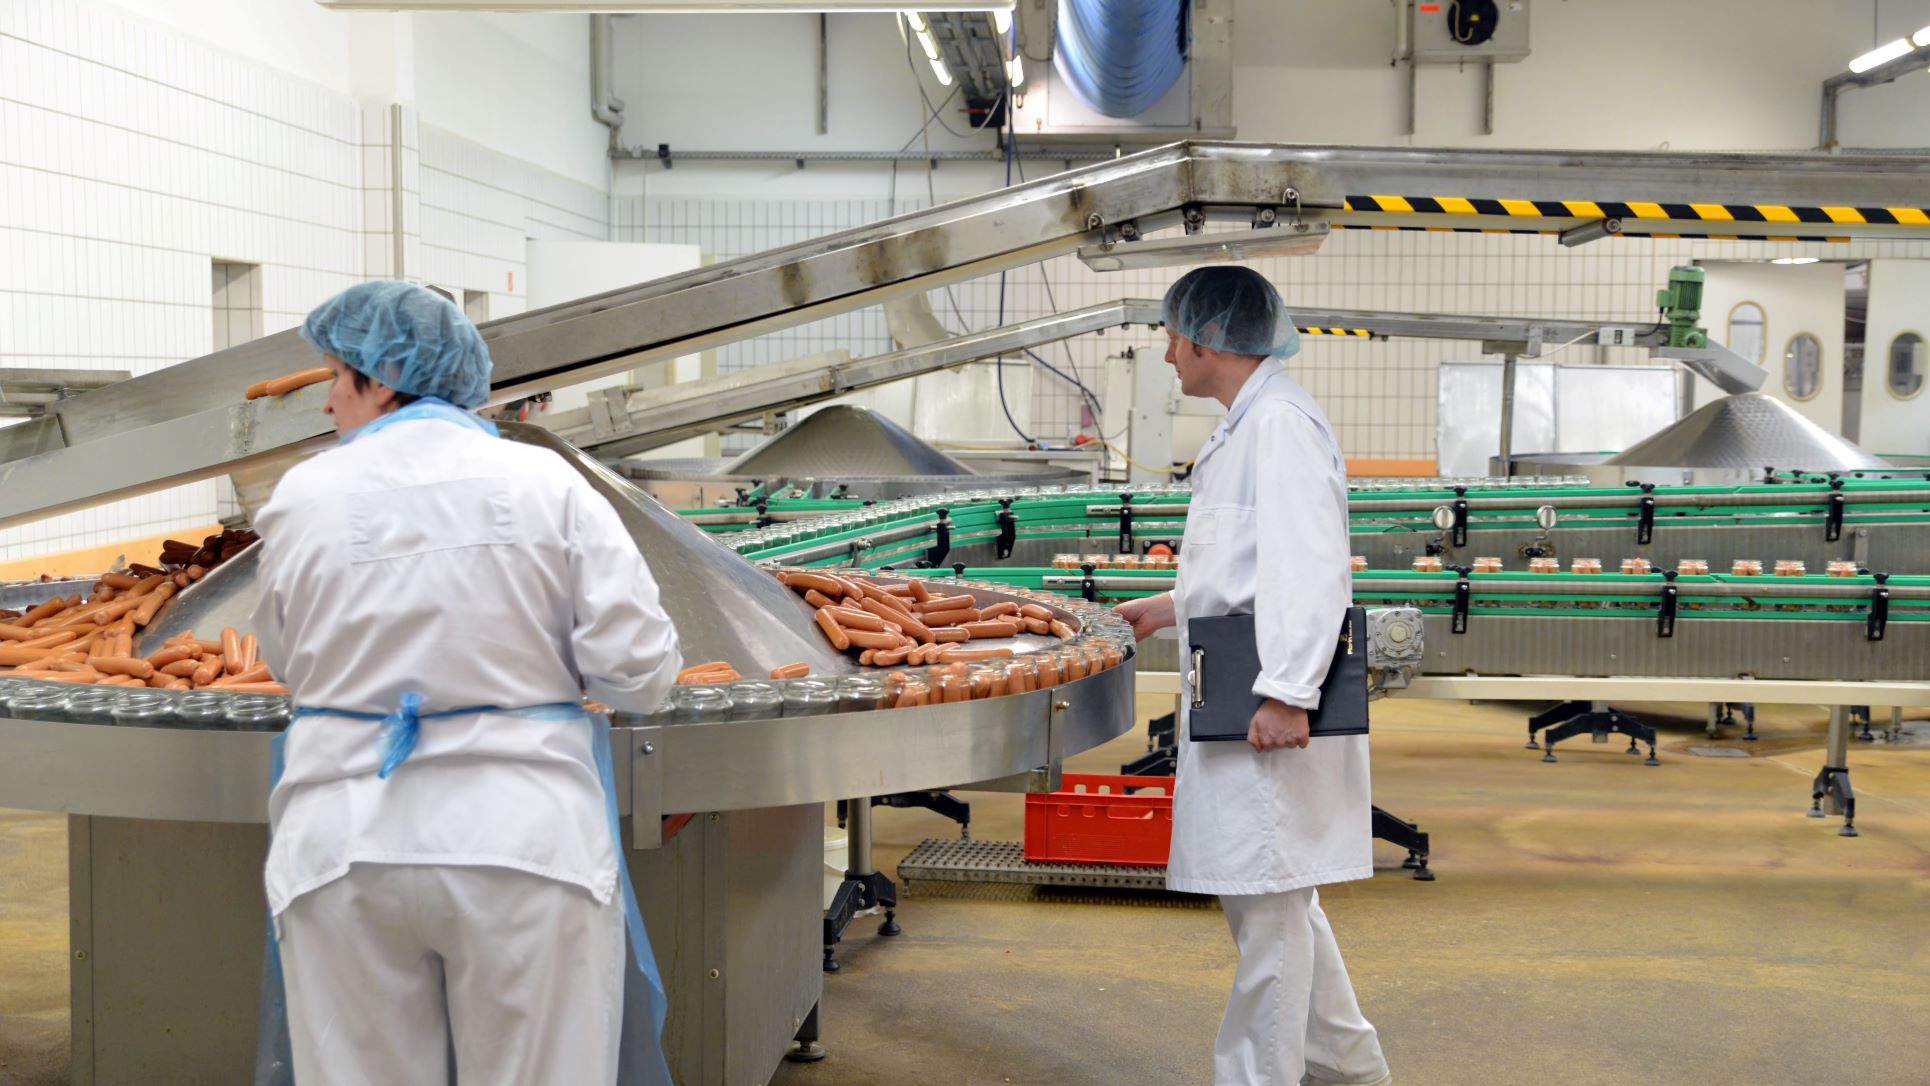 conveyor belt, sausage production, sausage plant, sausage factory, butchery,